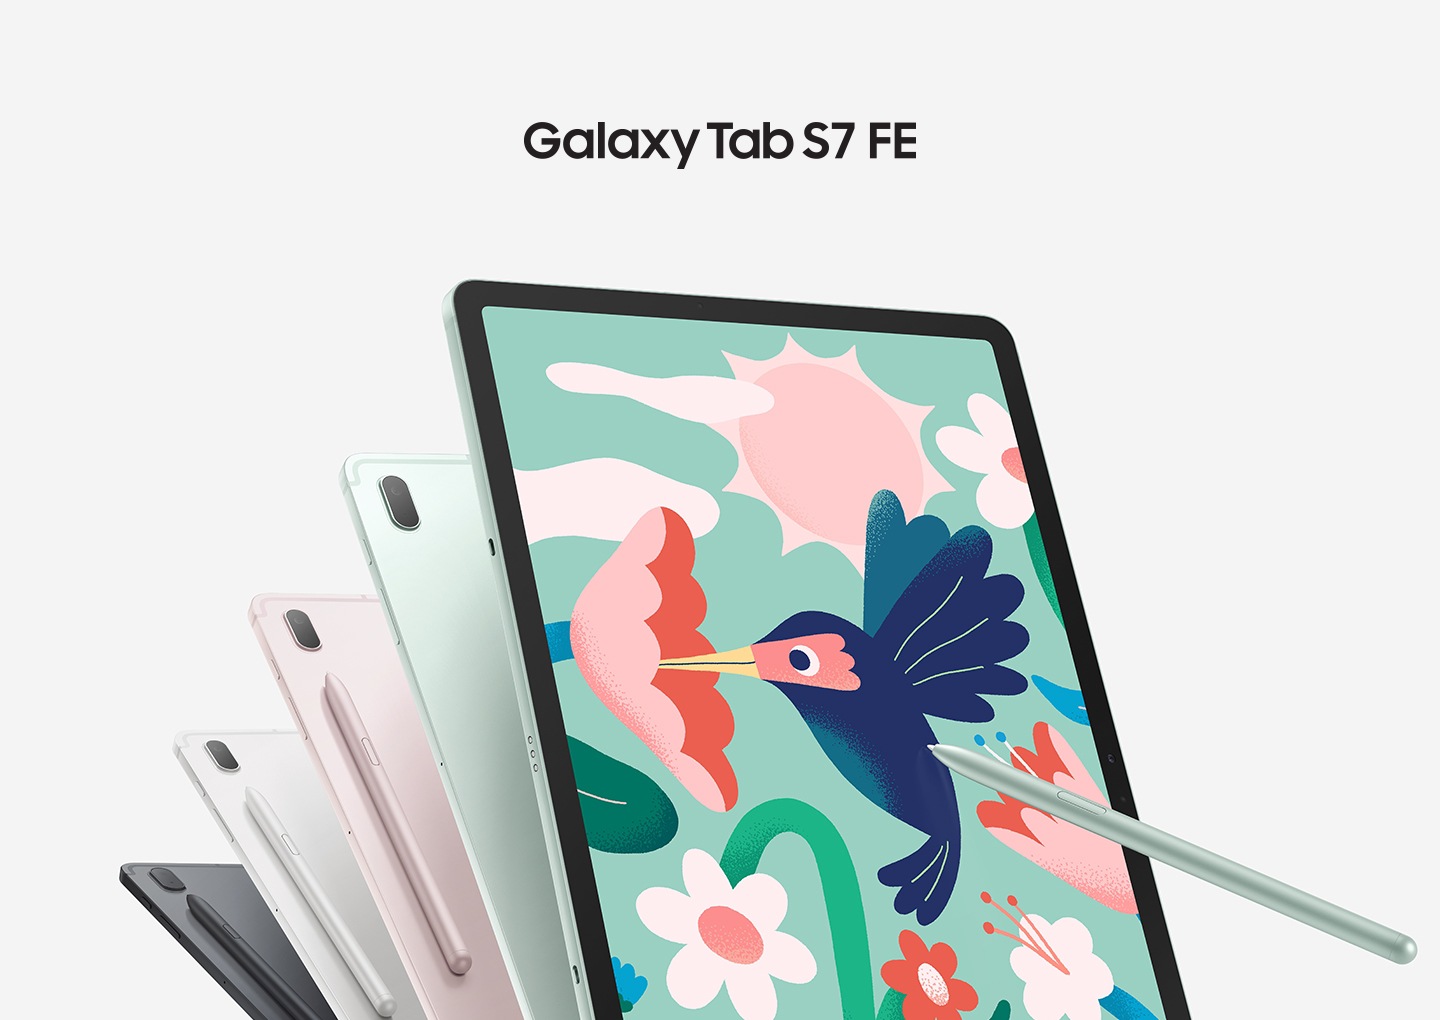 Samsung Galaxy Tab 7 – Un aperçu complet de son design et ses